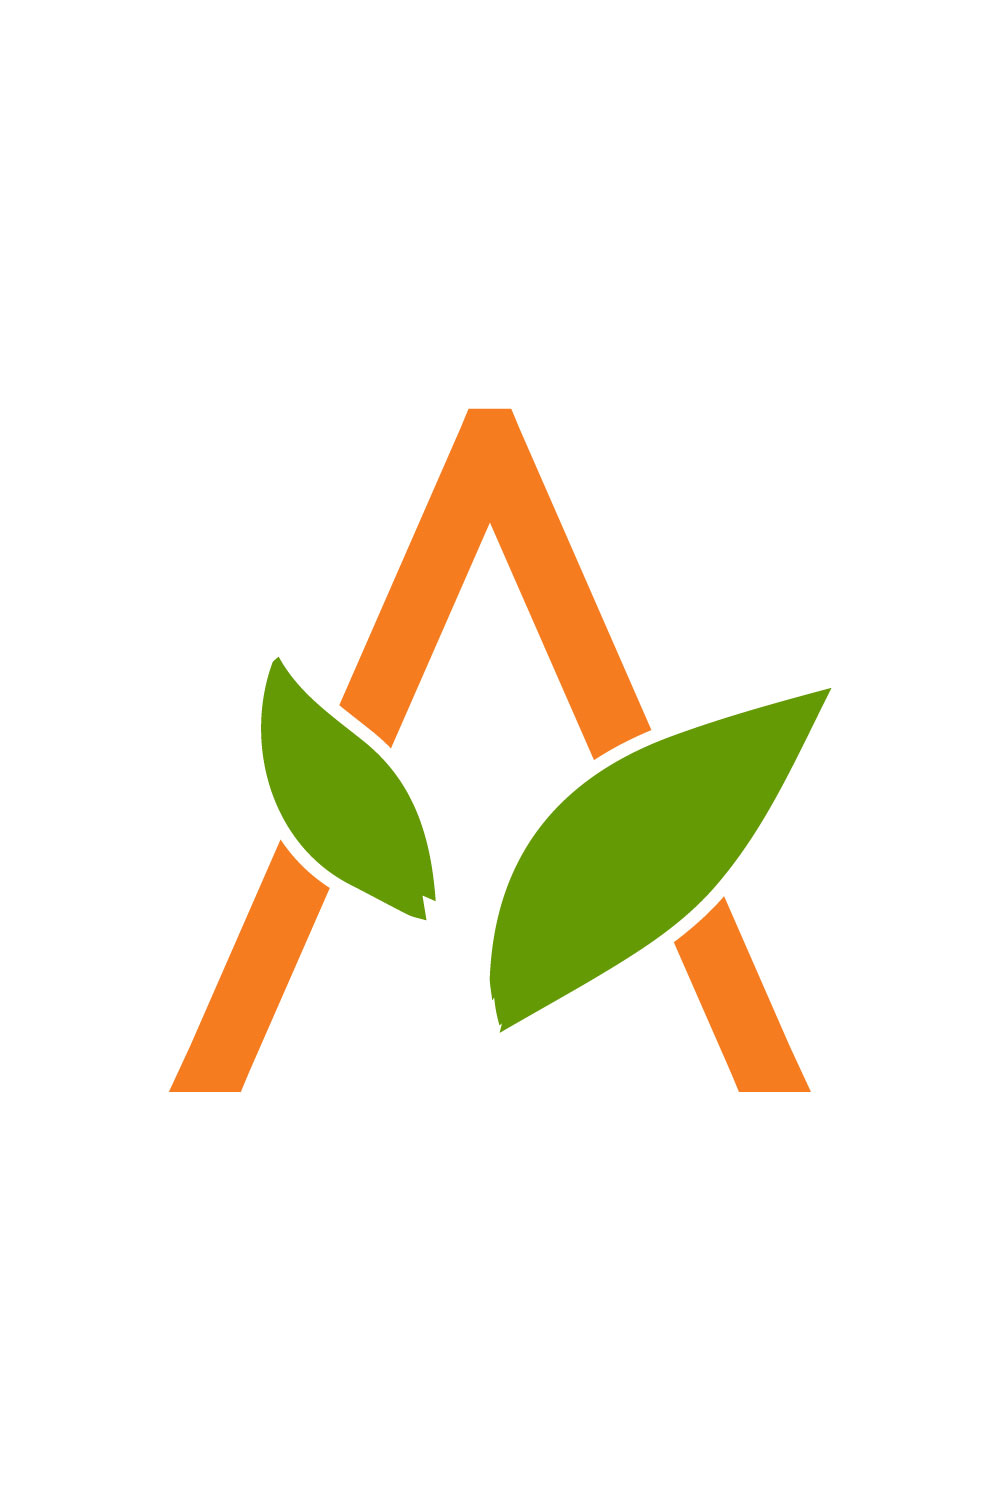 Free A Orange Letter logo pinterest preview image.